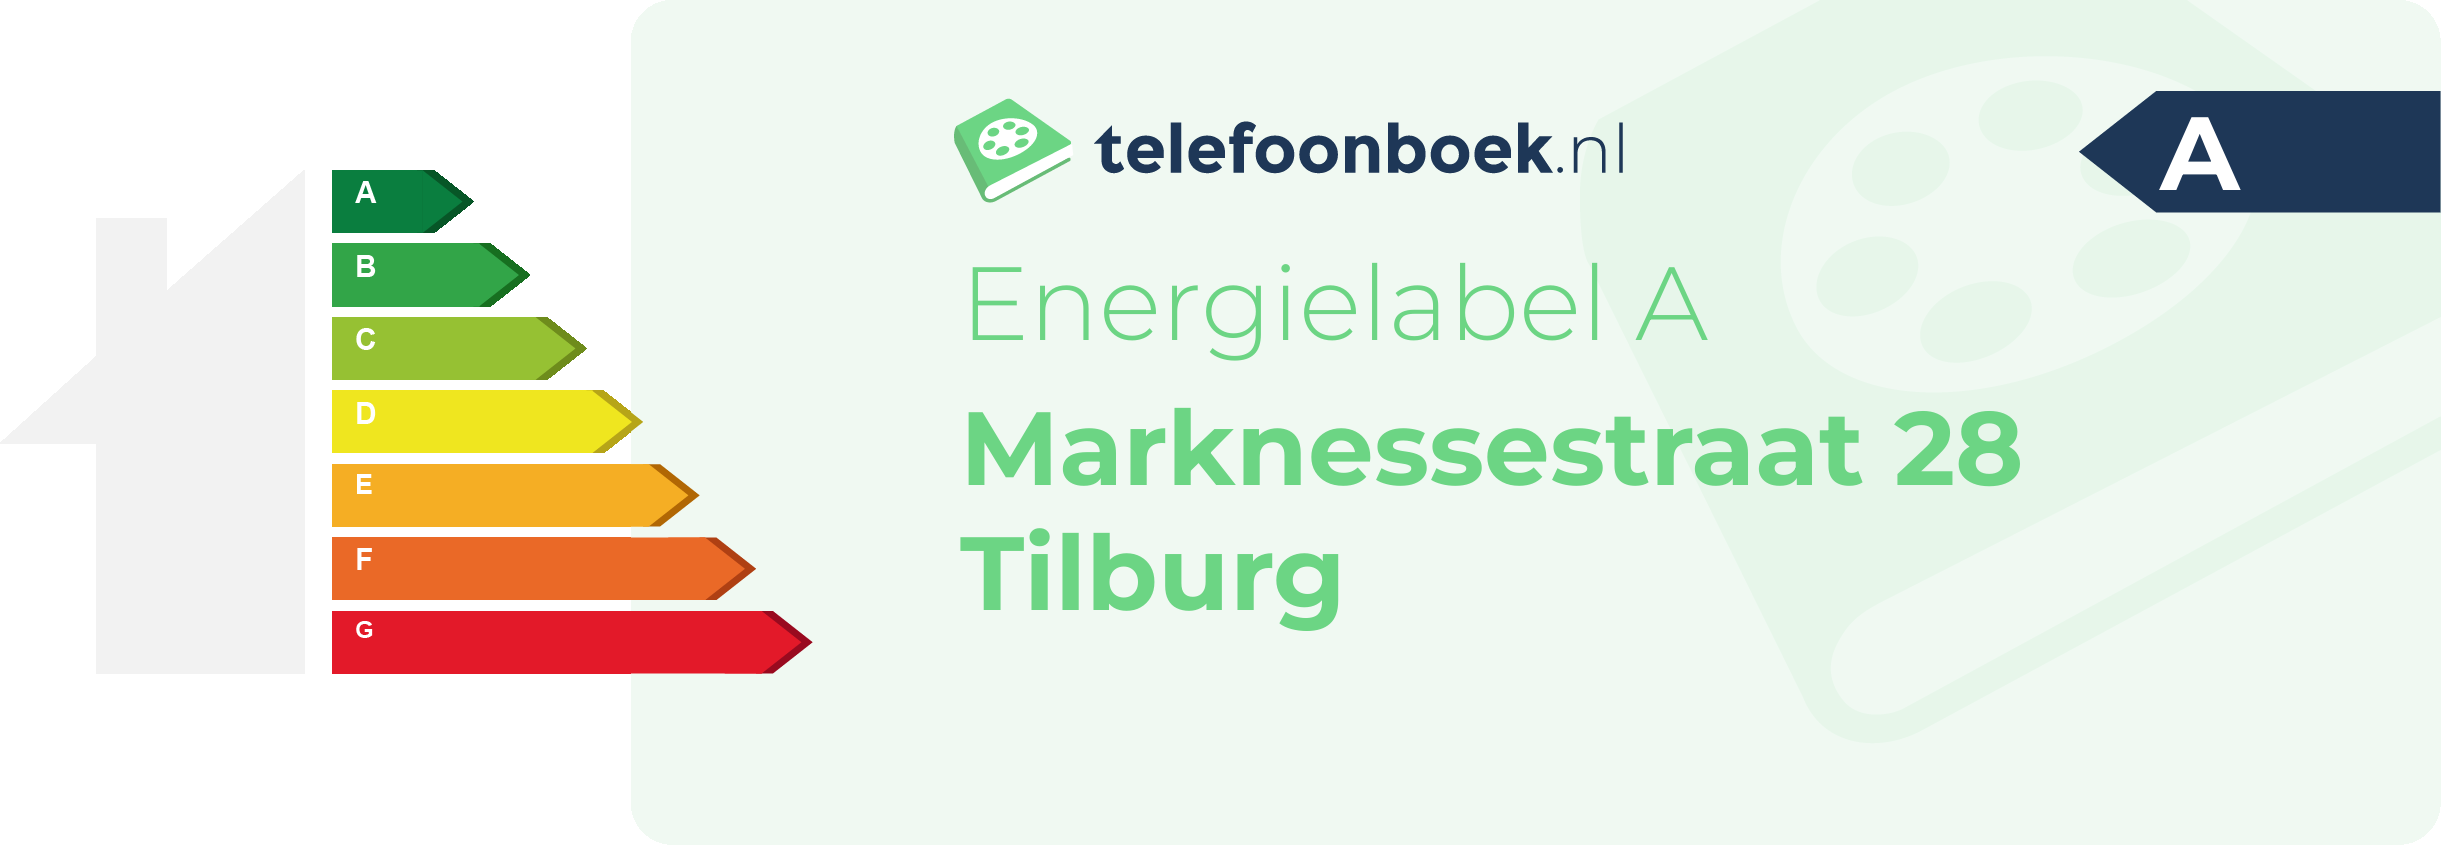 Energielabel Marknessestraat 28 Tilburg